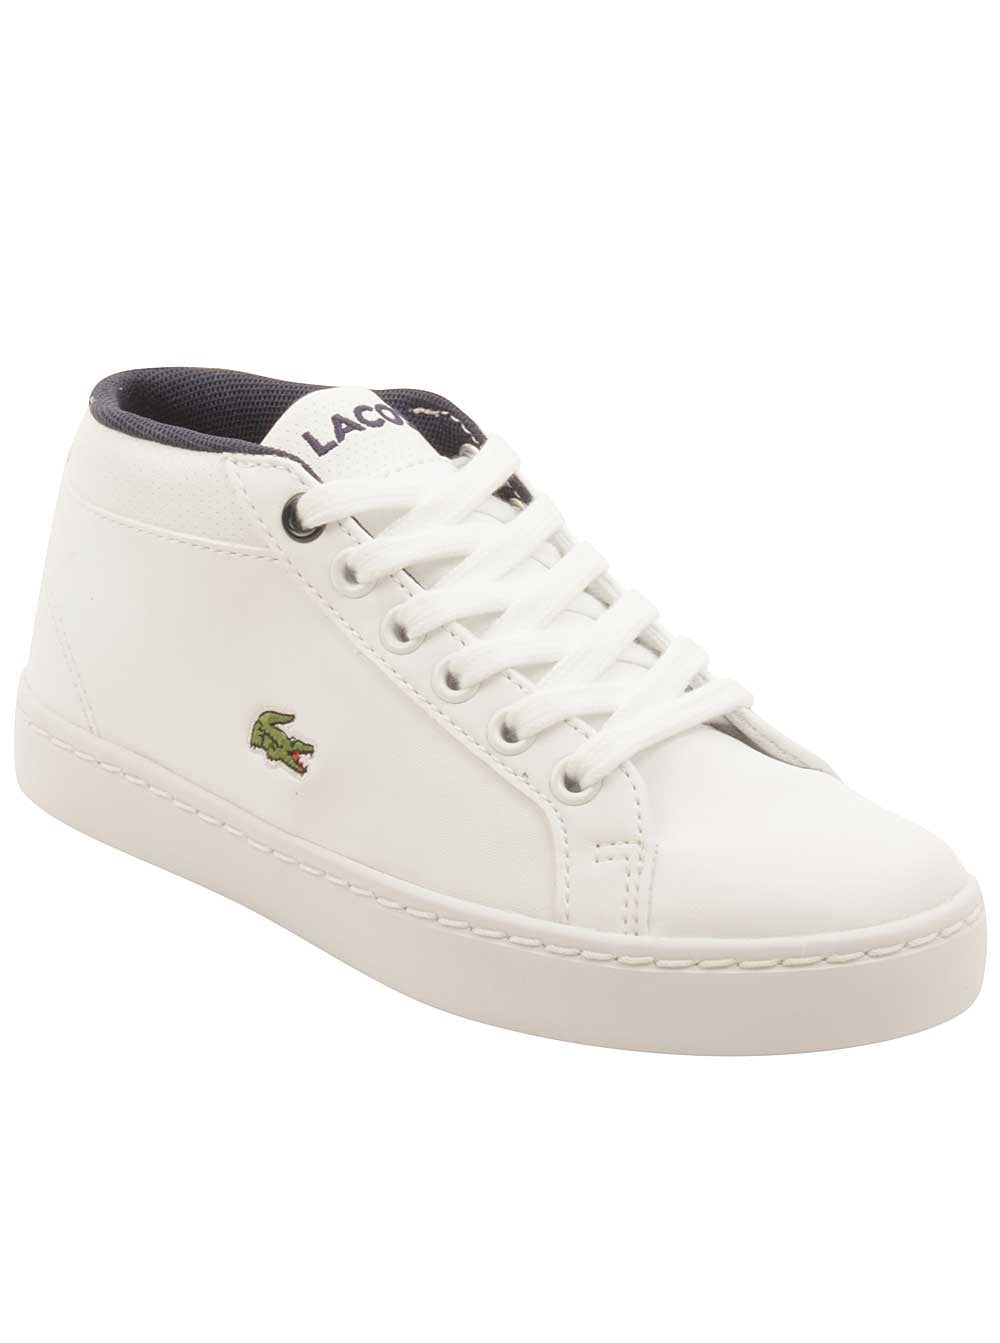 Lacoste 316 Sneakers White - Walmart.com